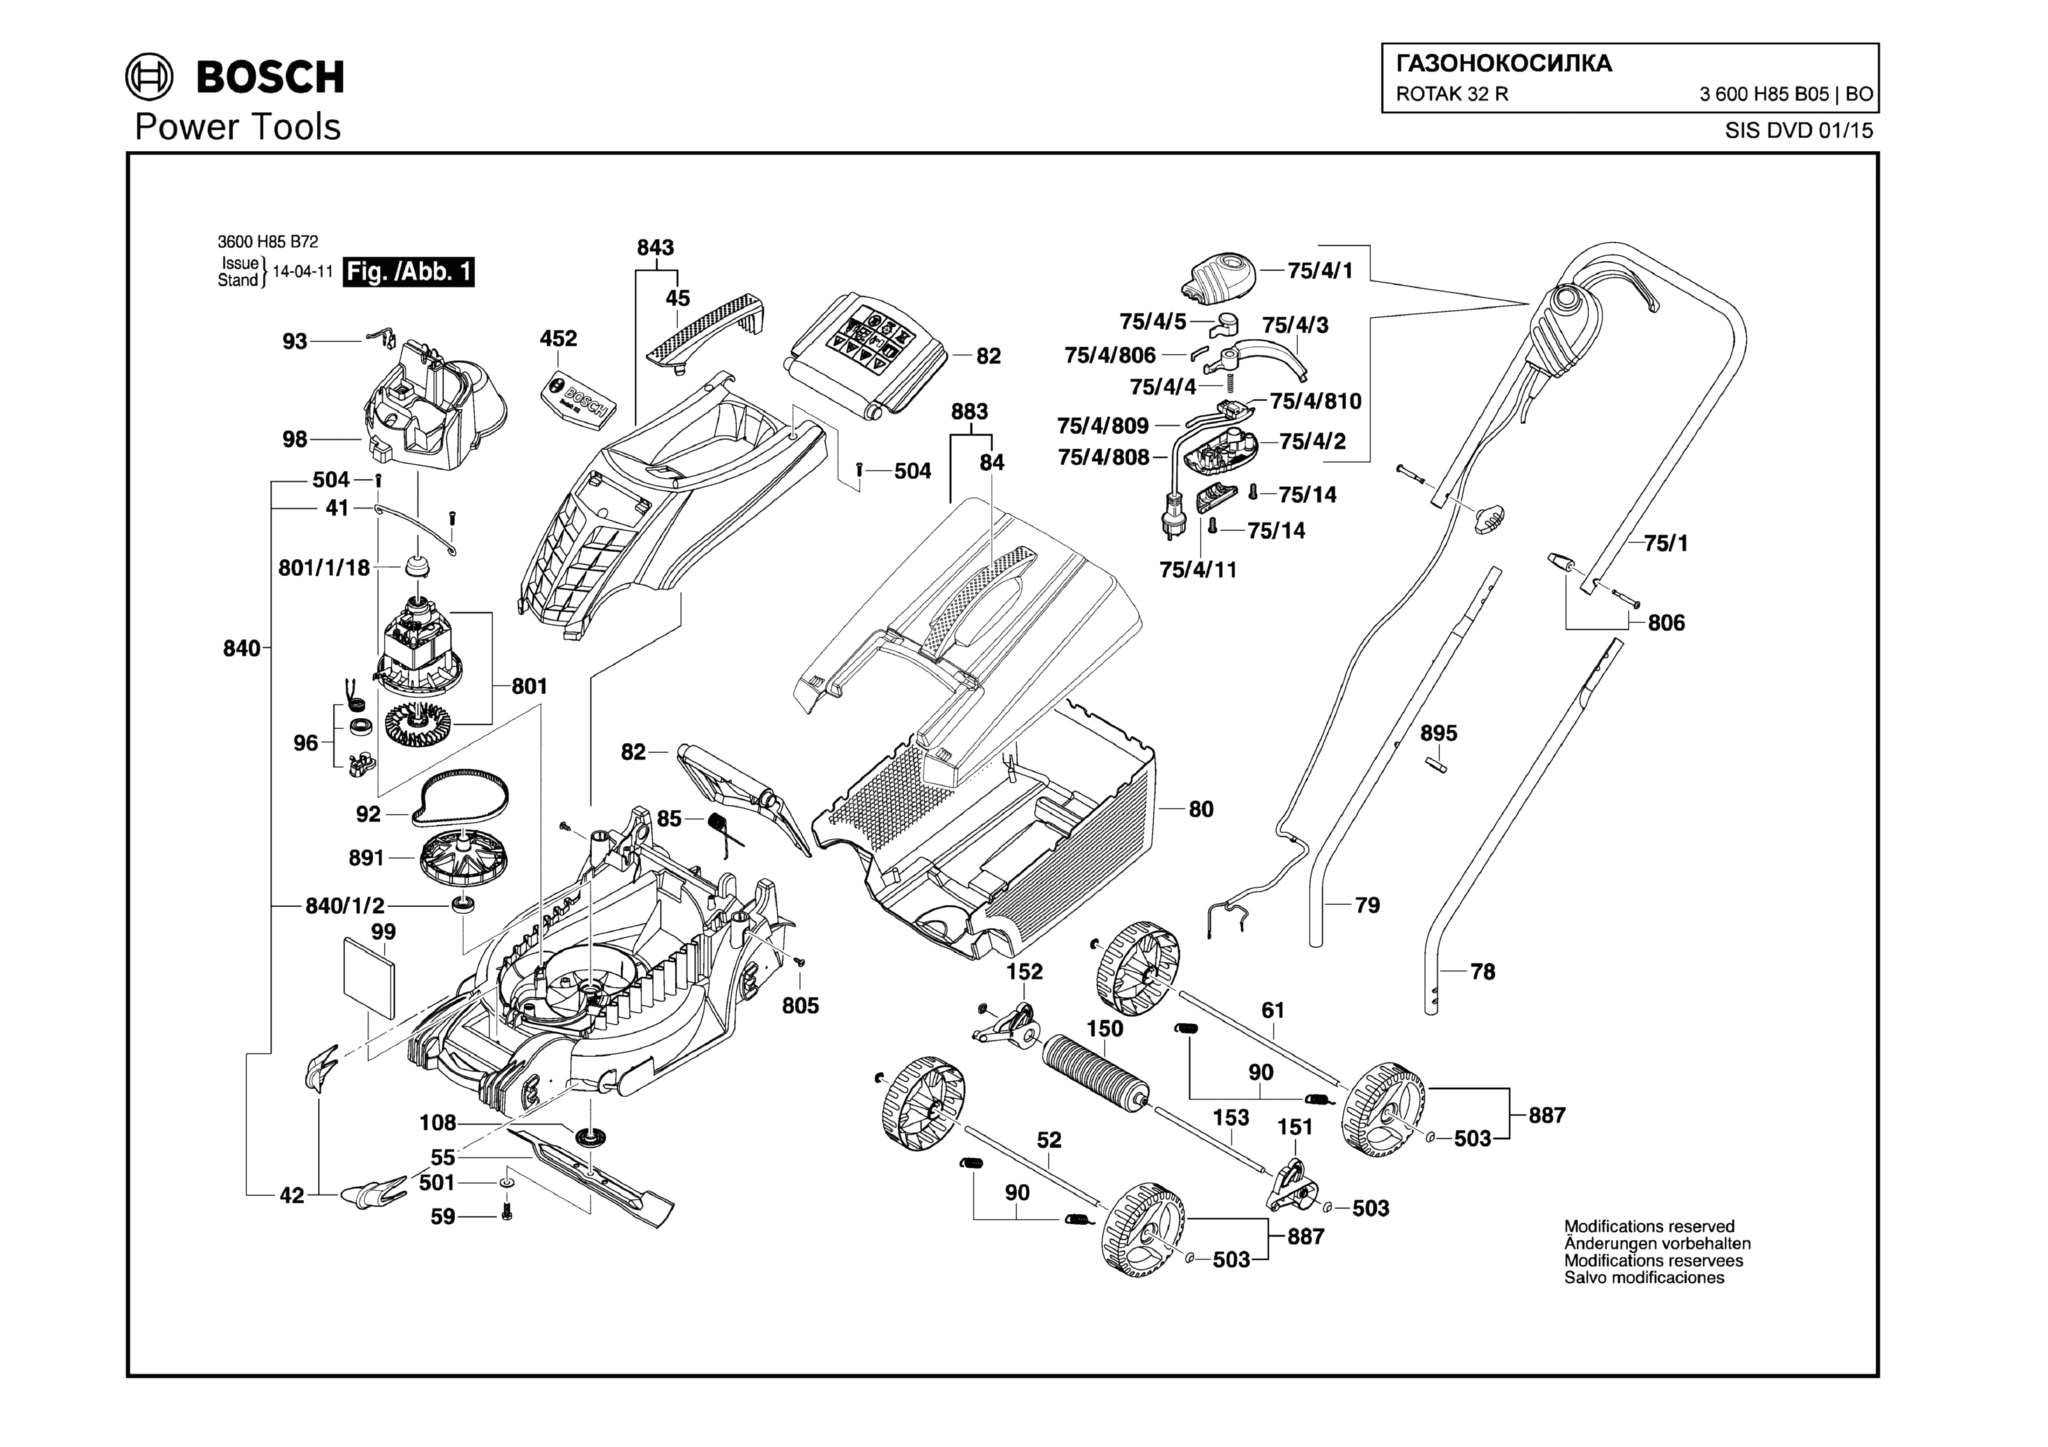 Запчасти, схема и деталировка Bosch ROTAK 32 R (ТИП 3600H85B05)